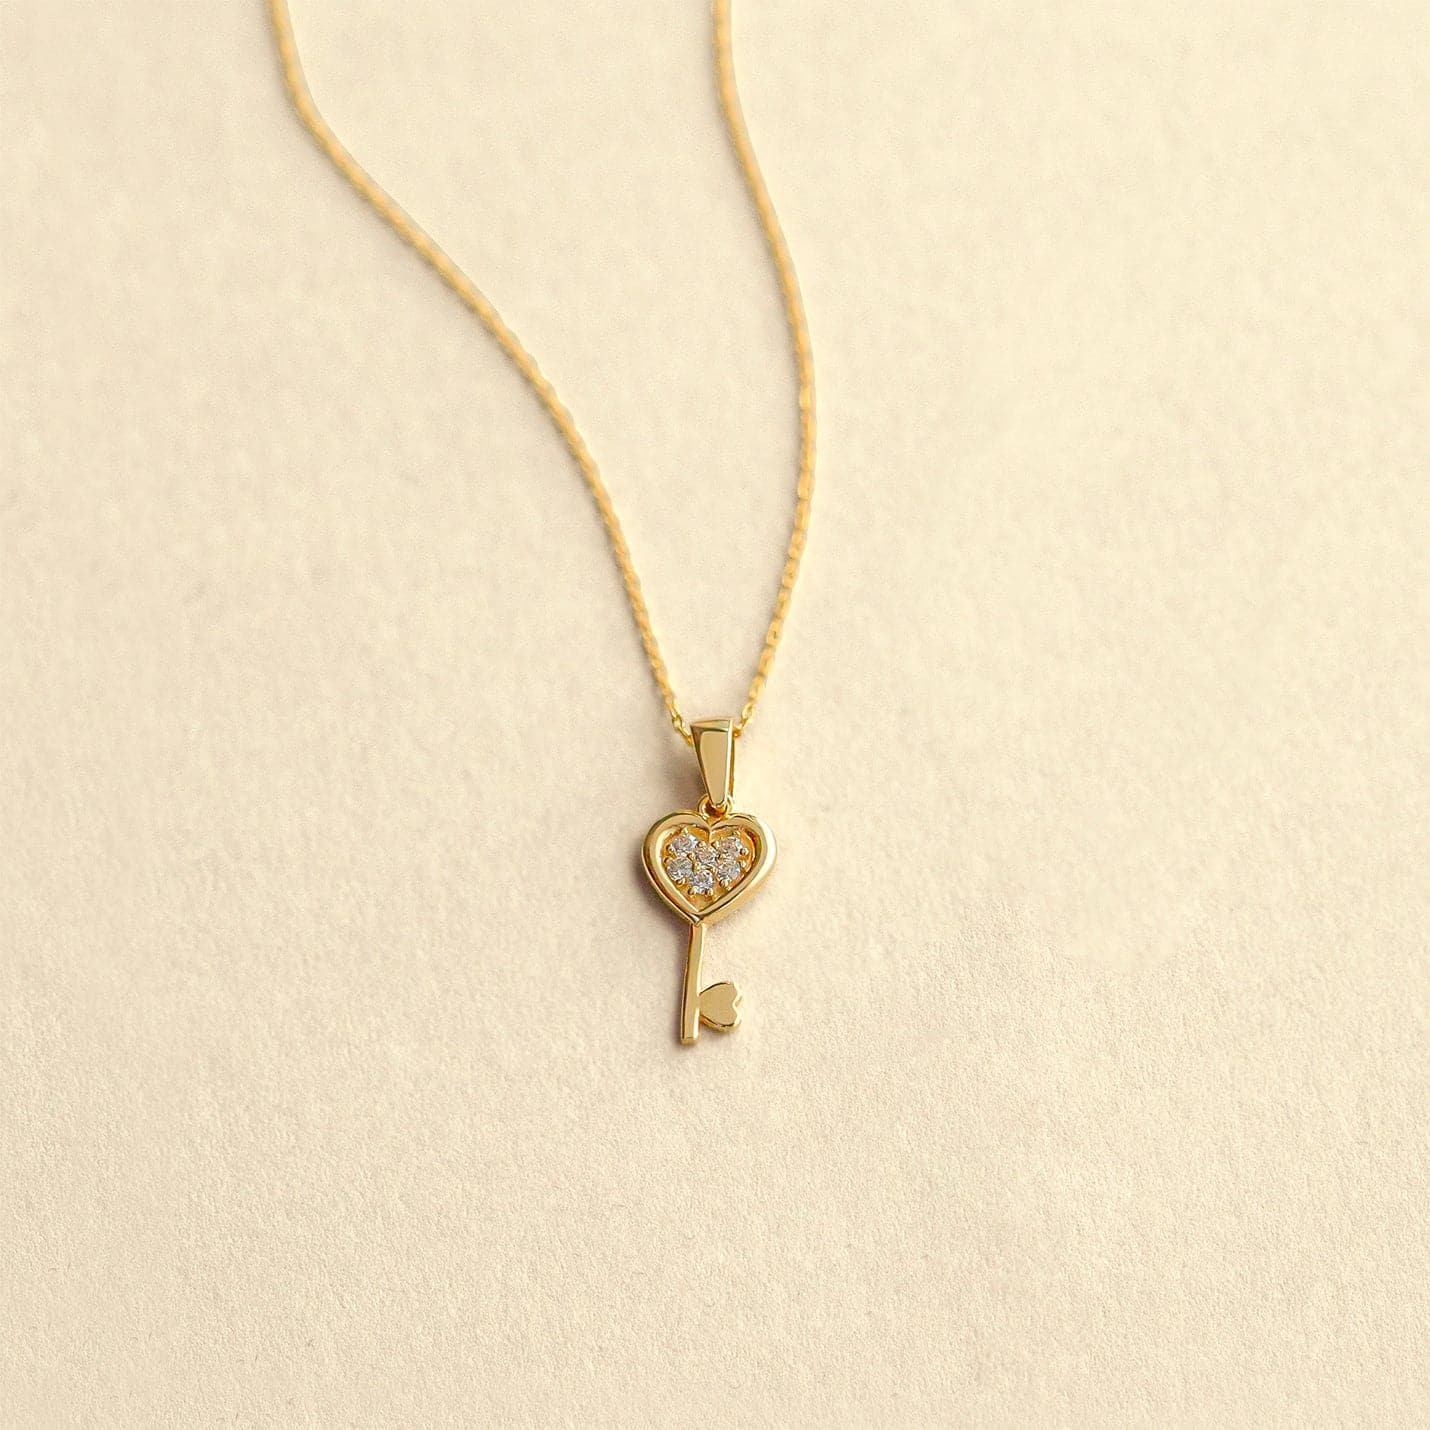 Gelin Double Heart-Top Key Pendant Necklace in 14K Gold